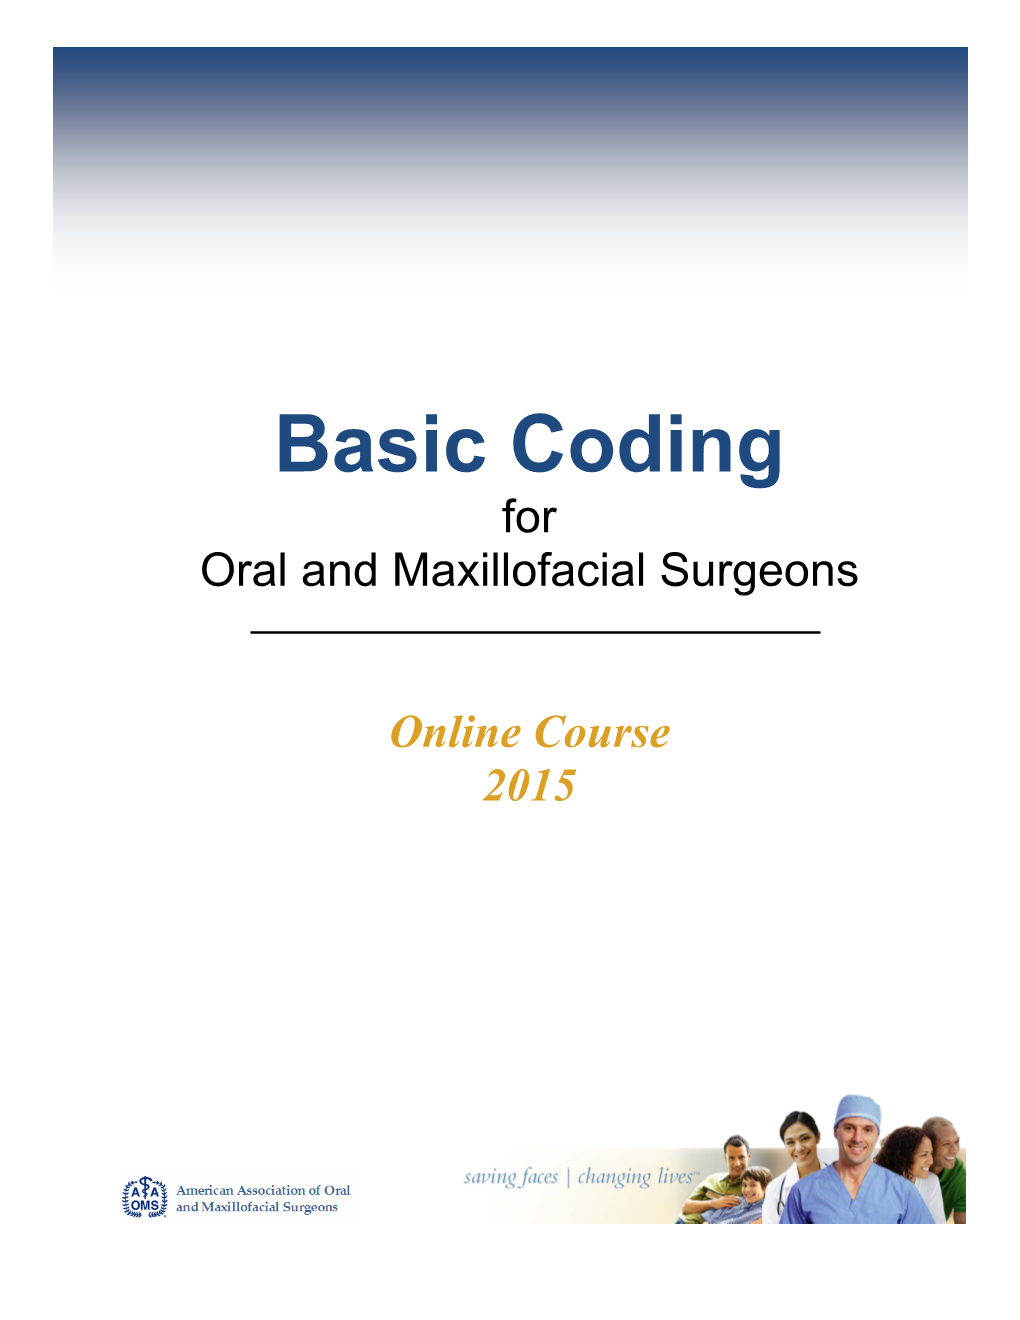 Basic Coding for Oral and Maxillofacial Surgeons